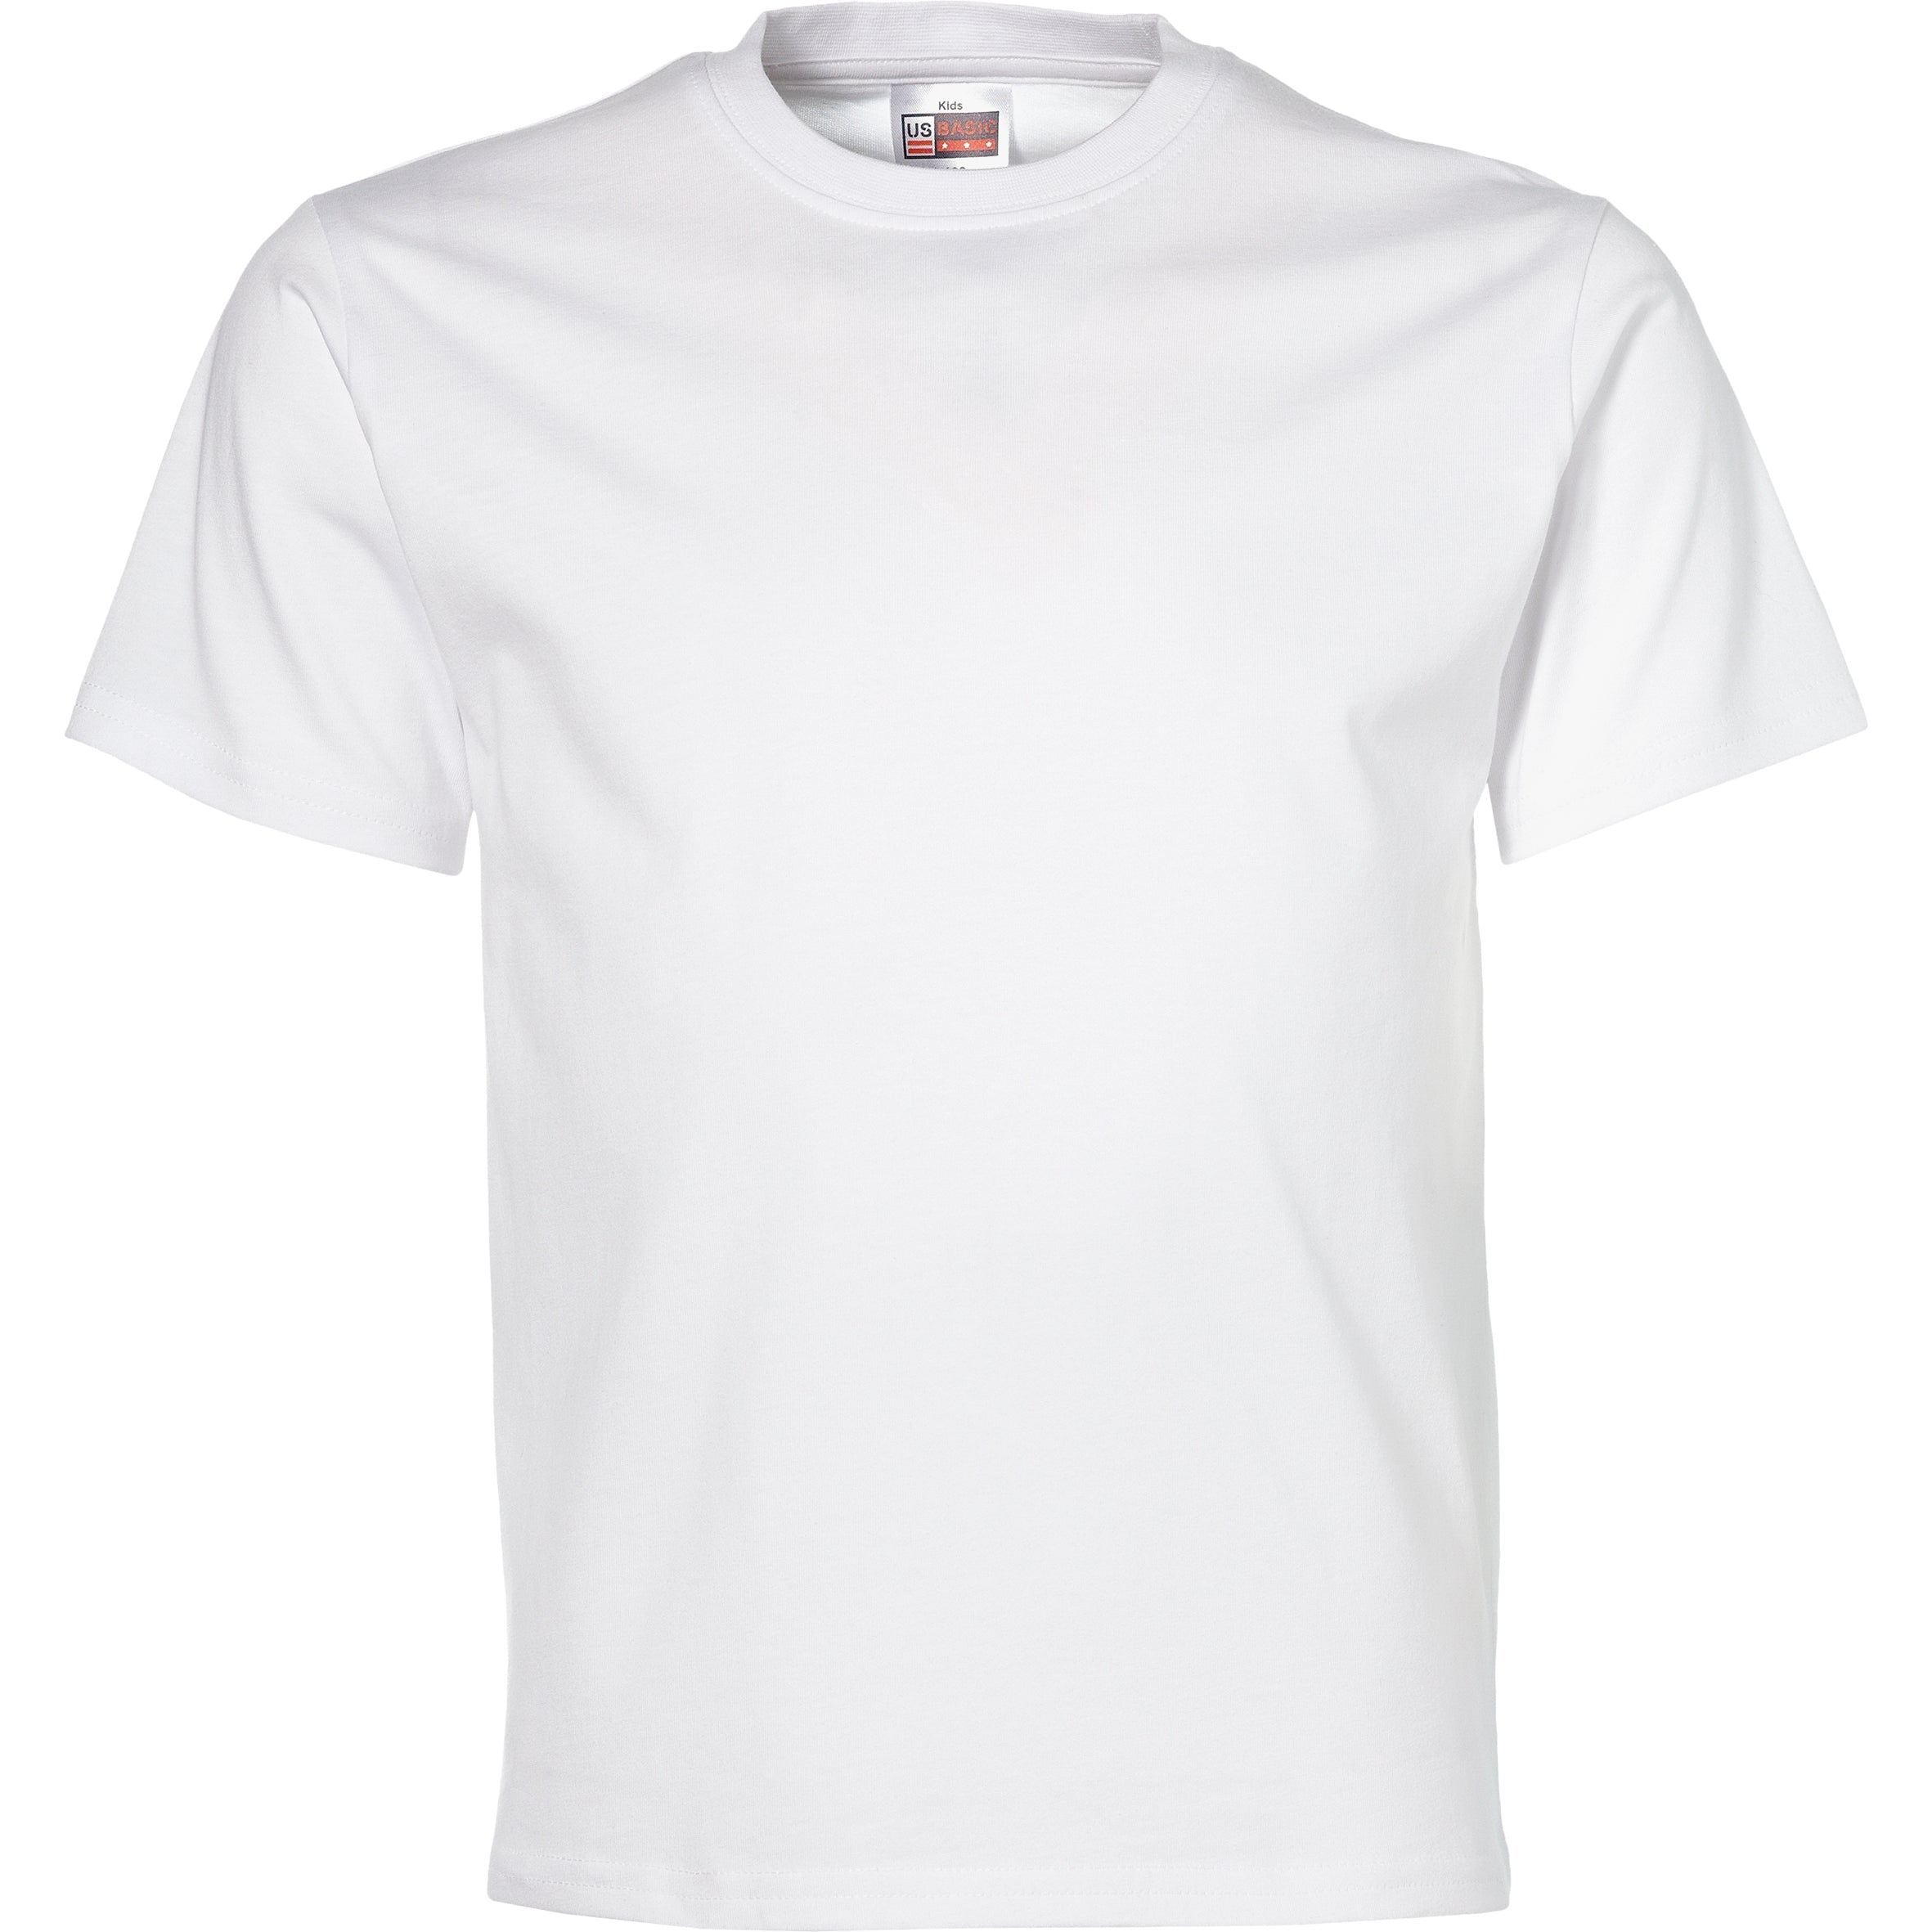 Kids Super Club 150 T-Shirt-104-White-W